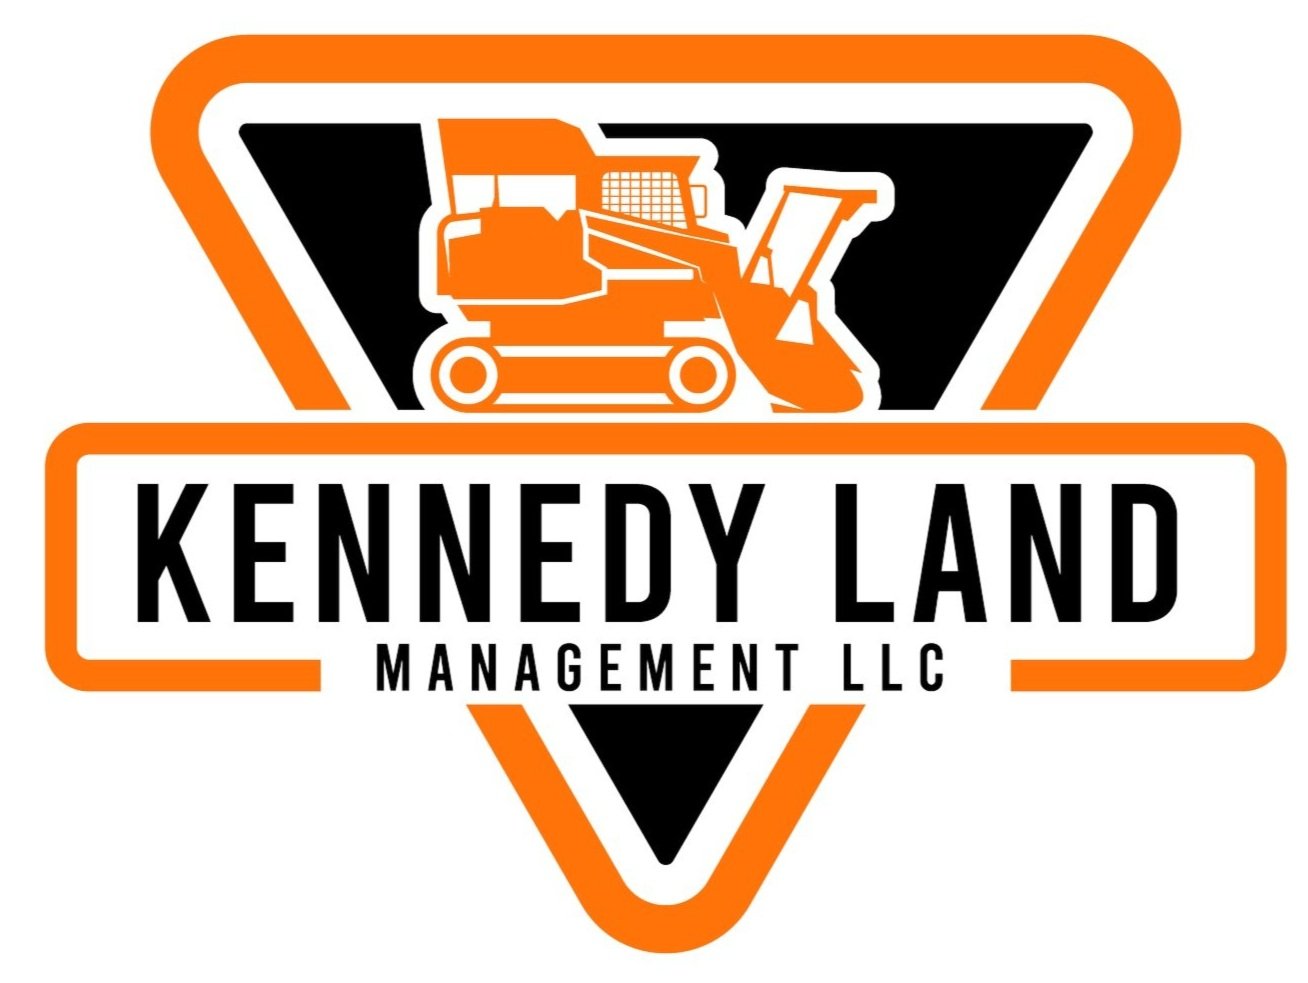 Kennedy Land Management LLC